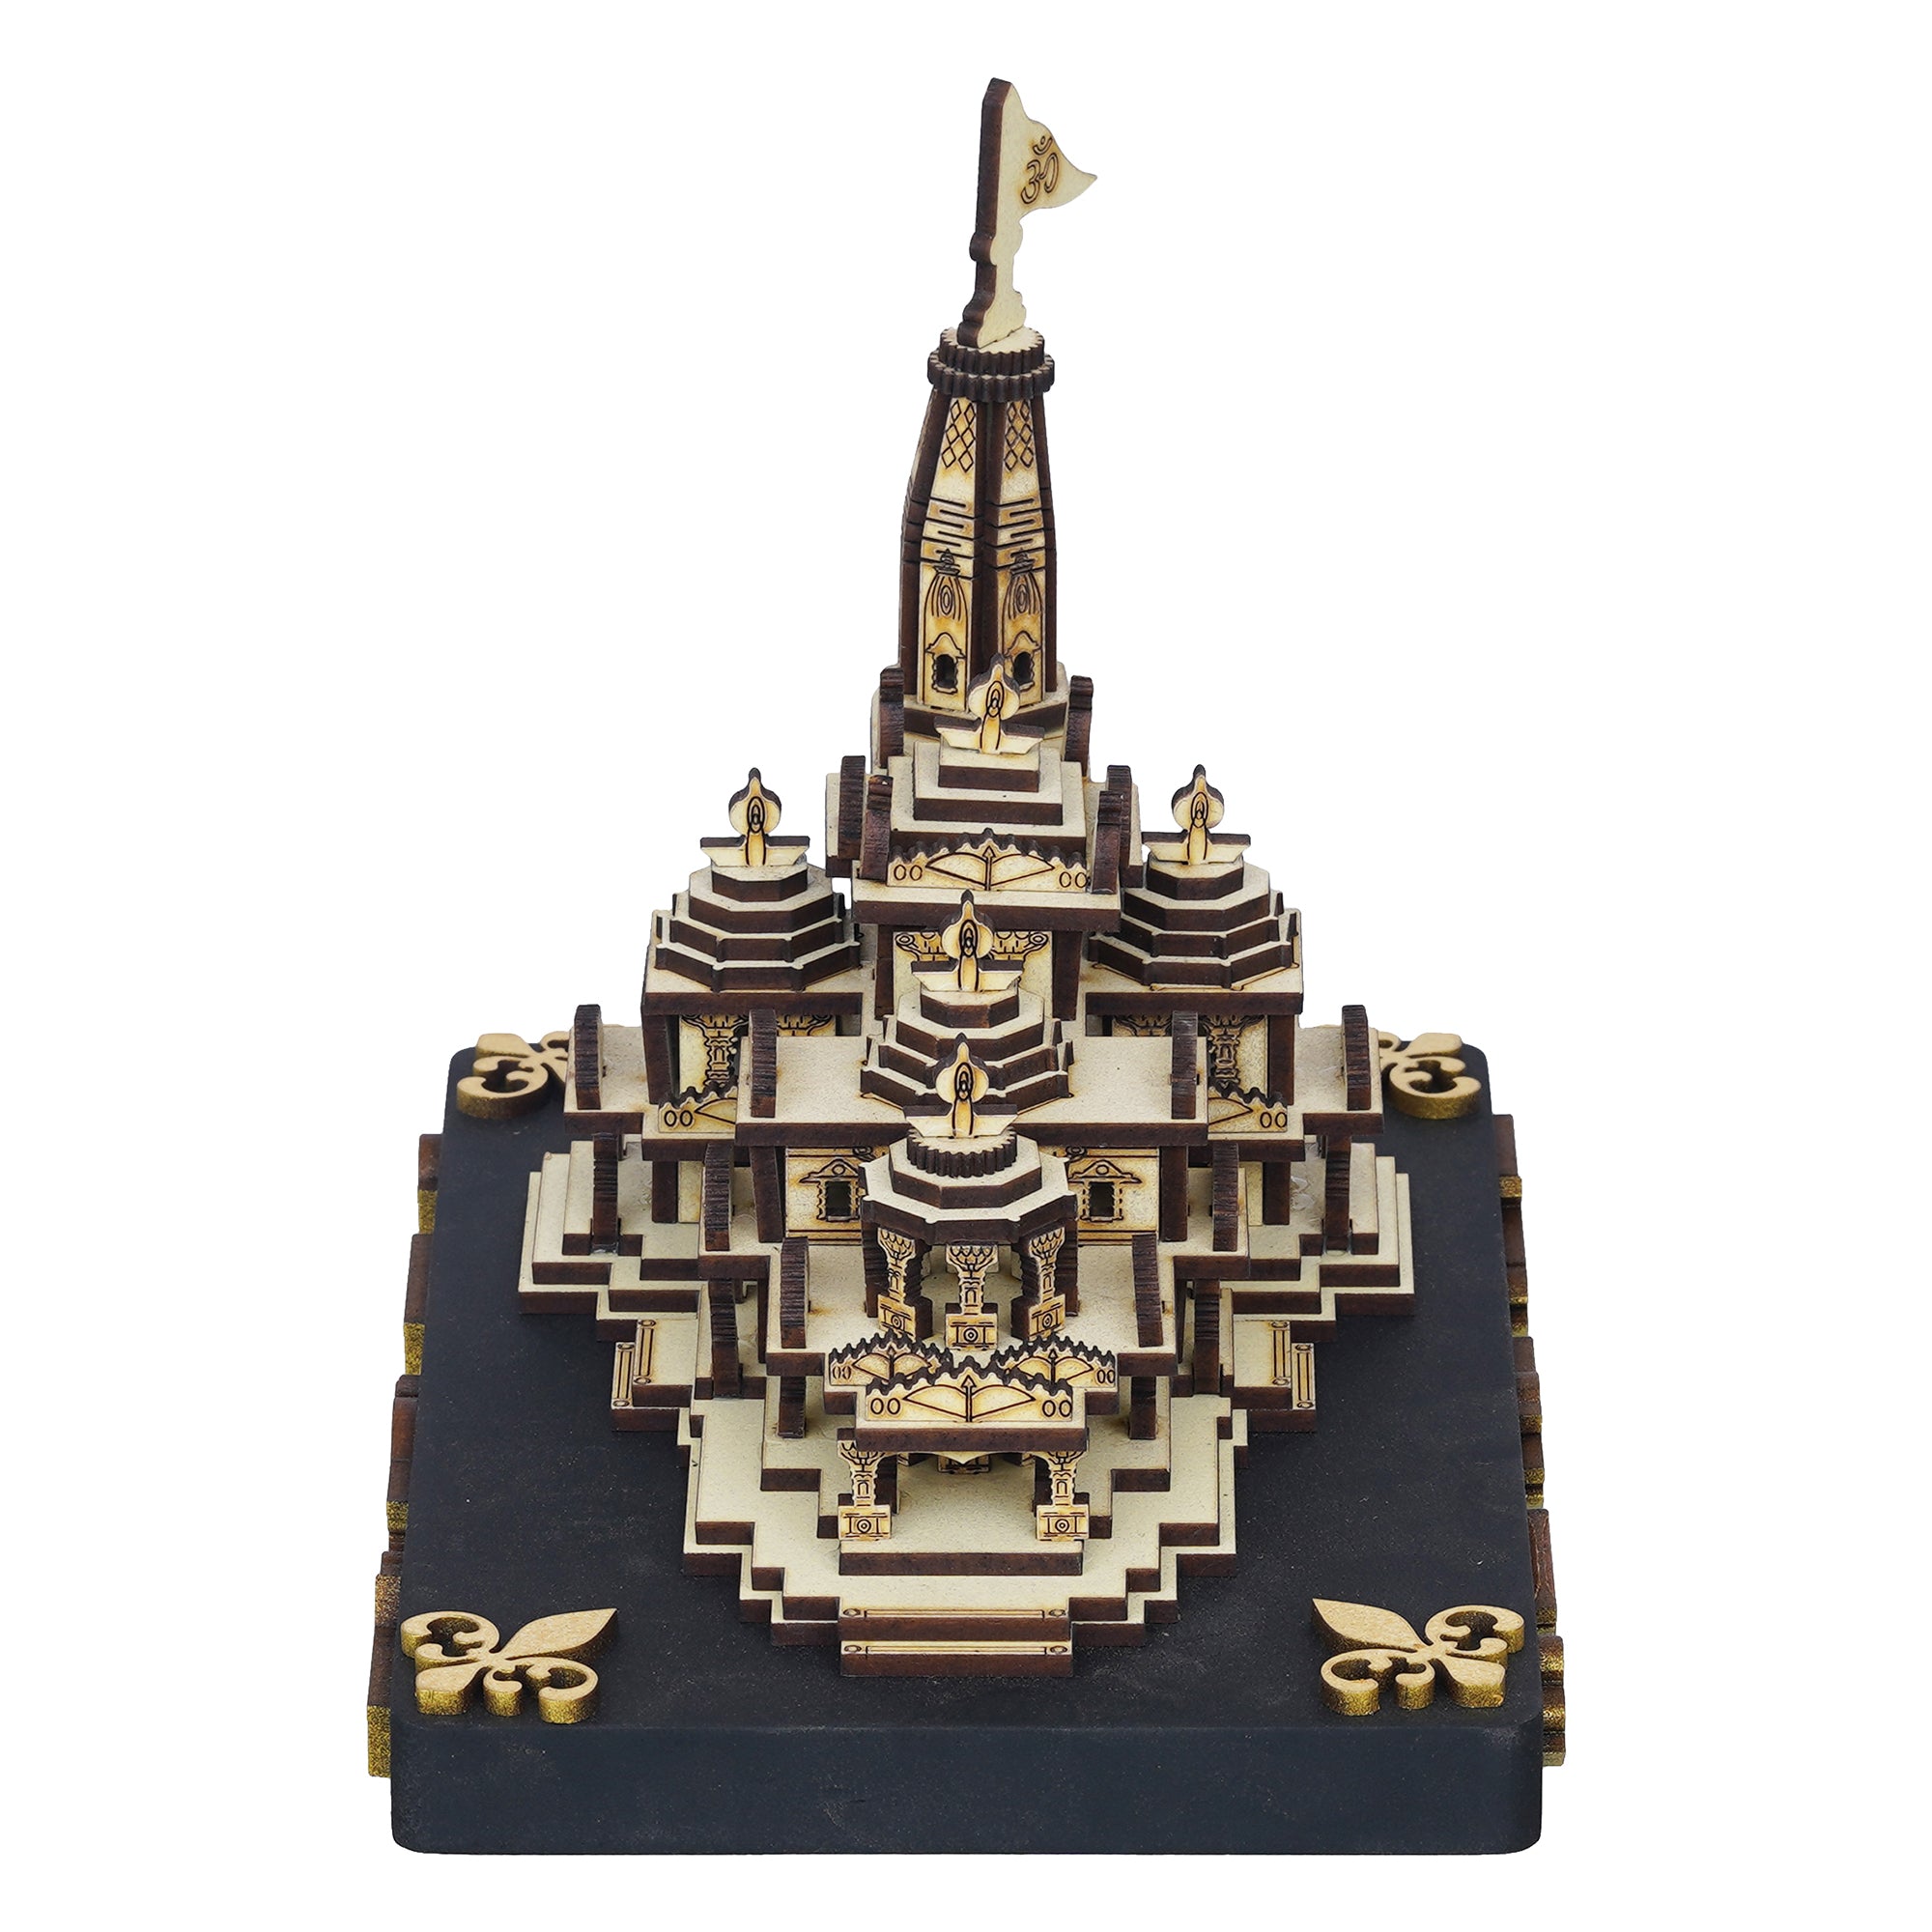 eCraftIndia Shri Ram Mandir Ayodhya Model - Wooden MDF Craftsmanship Authentic Designer Temple - Ideal for Home Temple, Decor, and Spiritual Gifting (Beige, Gold) 7